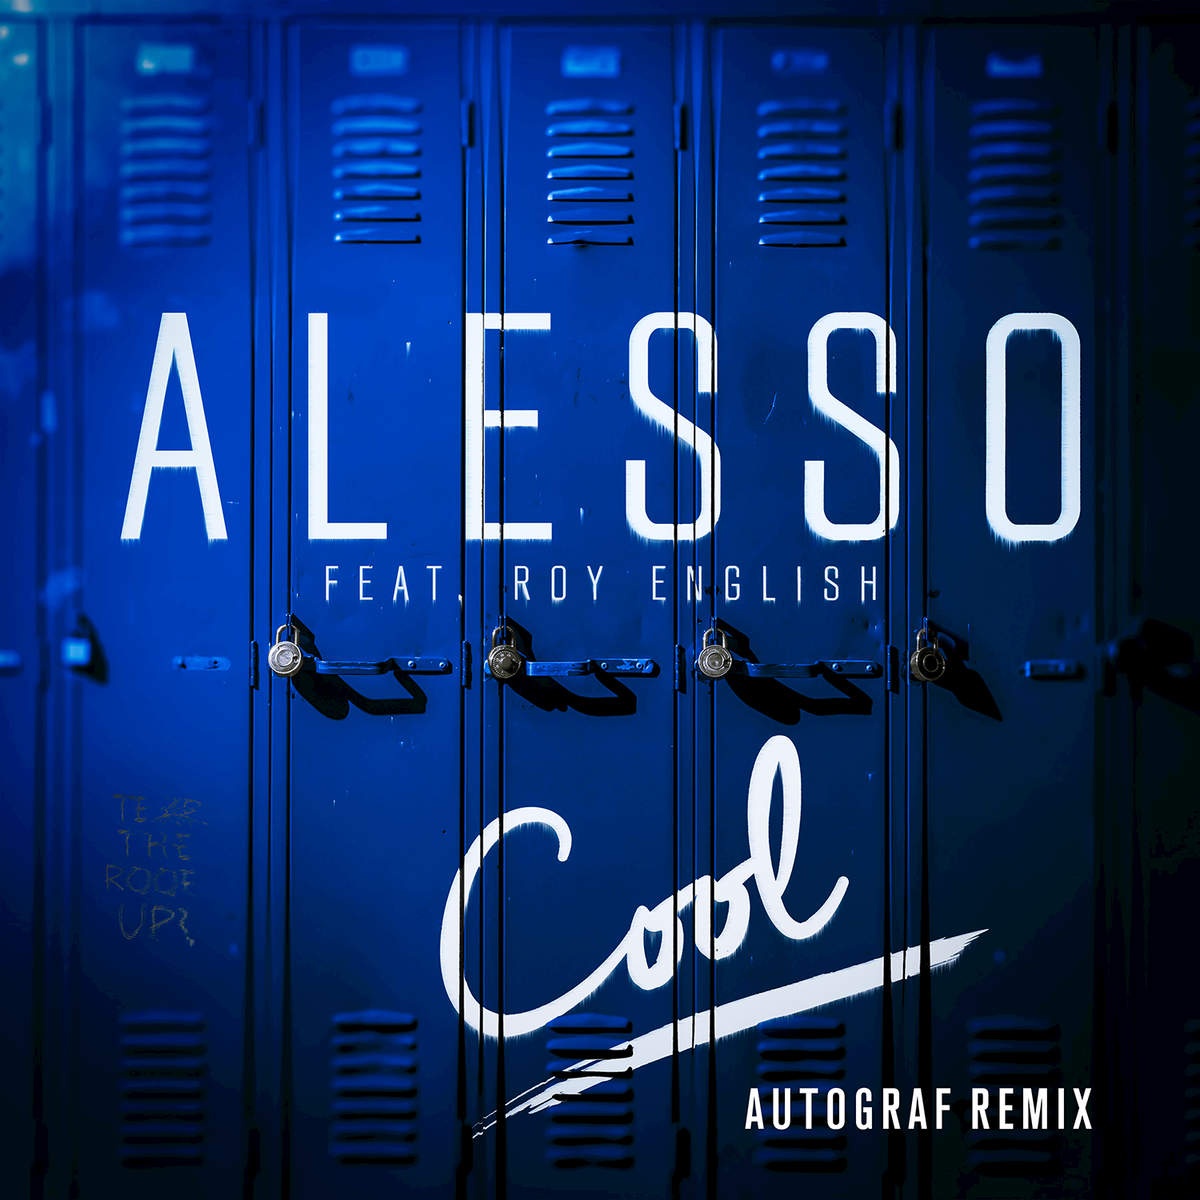 Cool (feat. Roy English) [Autograf Remix]